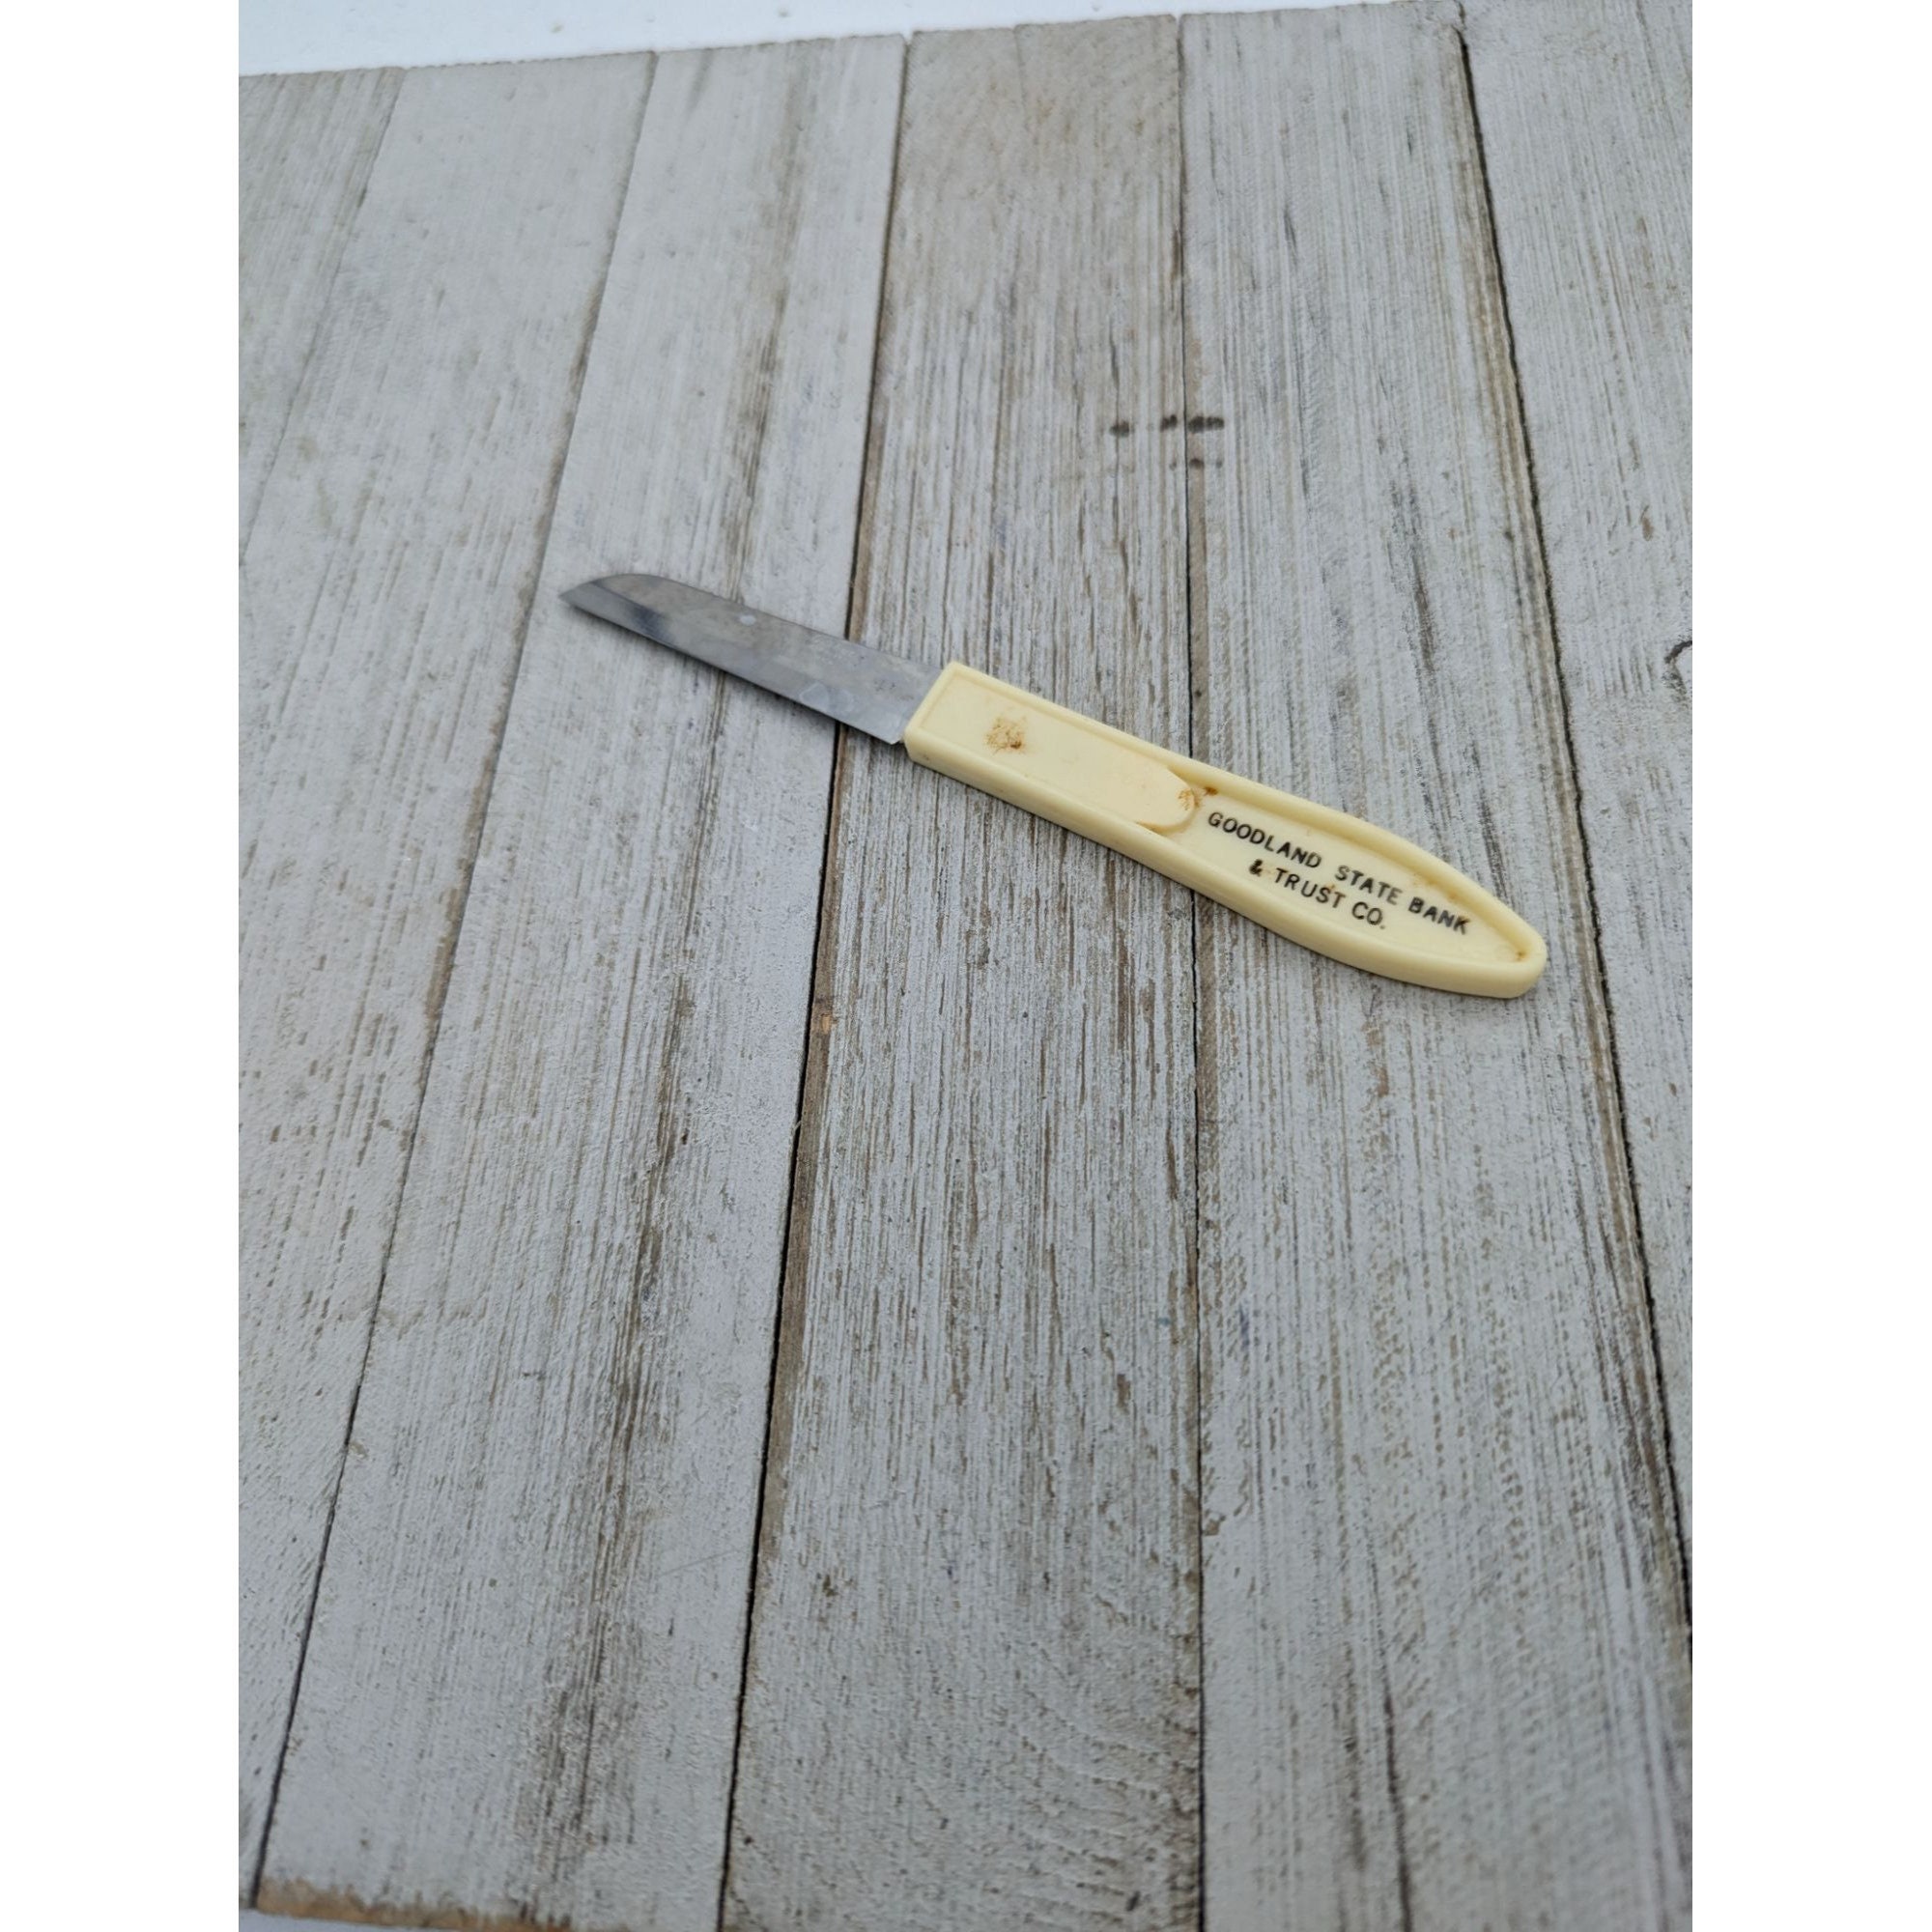 MCM Wooden Rivet Handle Serrated Knife Set Variety Farmhouse 